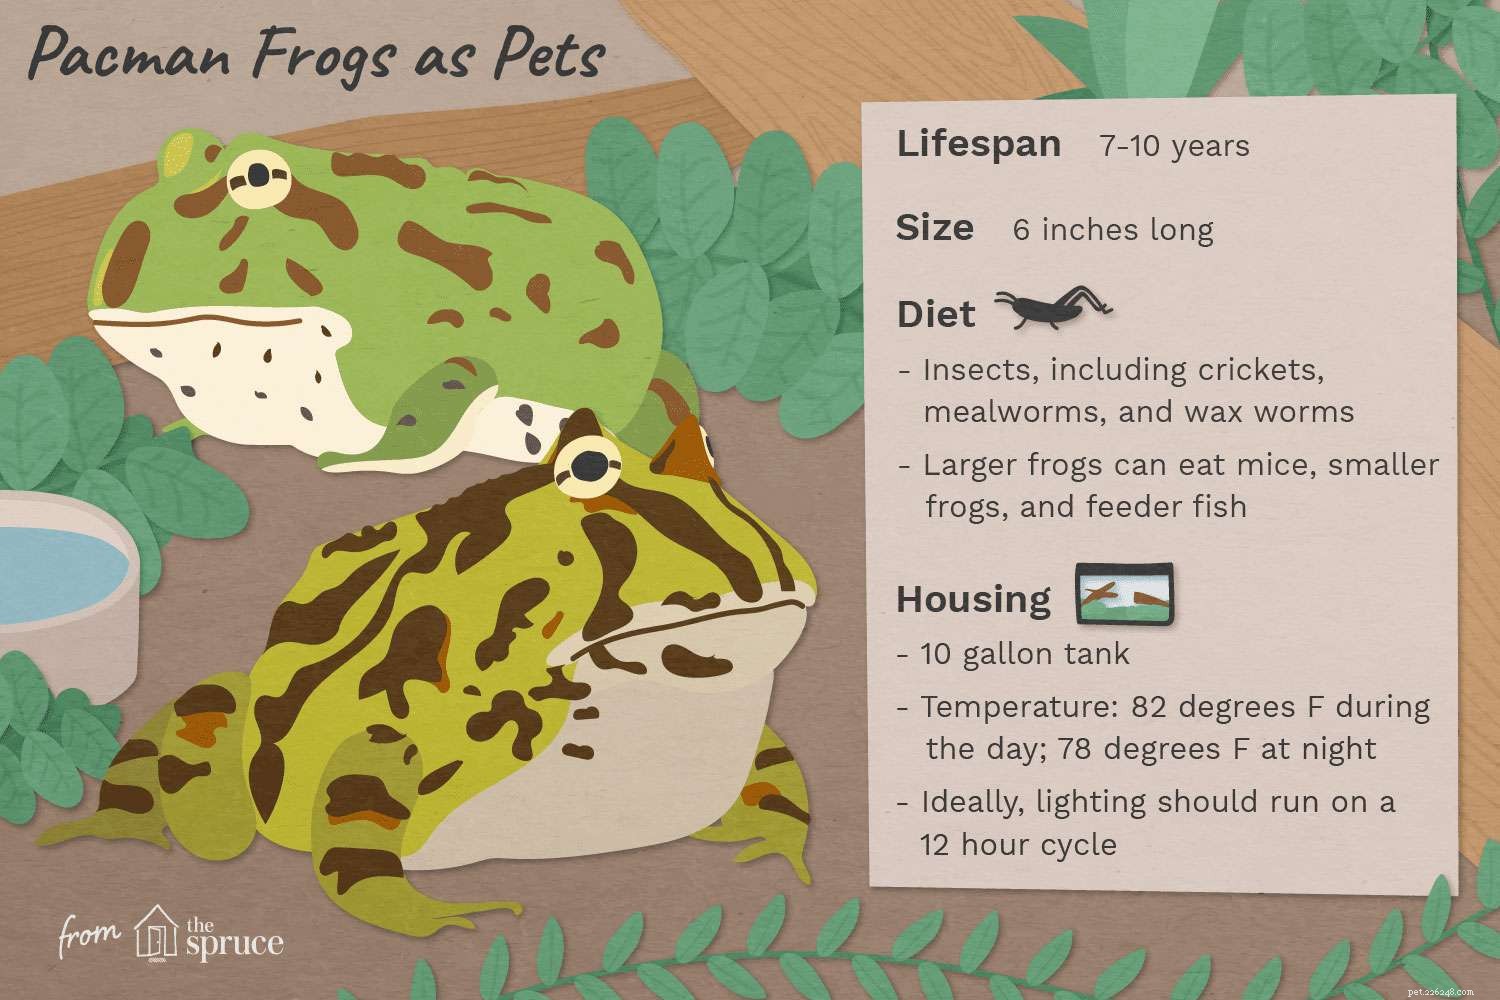 Pacman Frogs:Species Profile